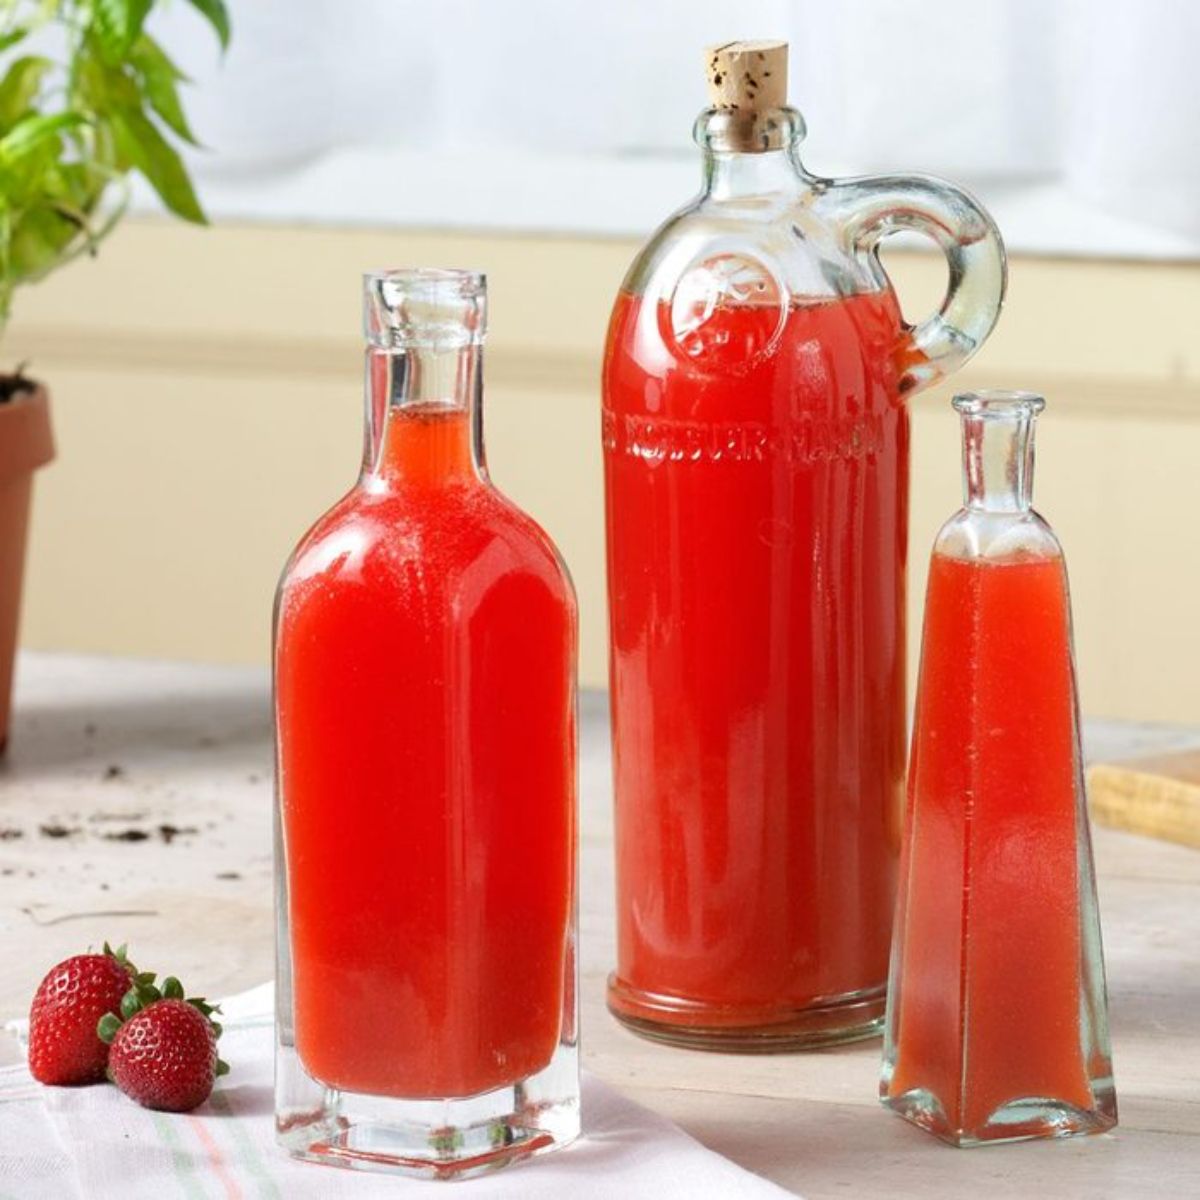 Strawberry basil vinegar in three glass jars.